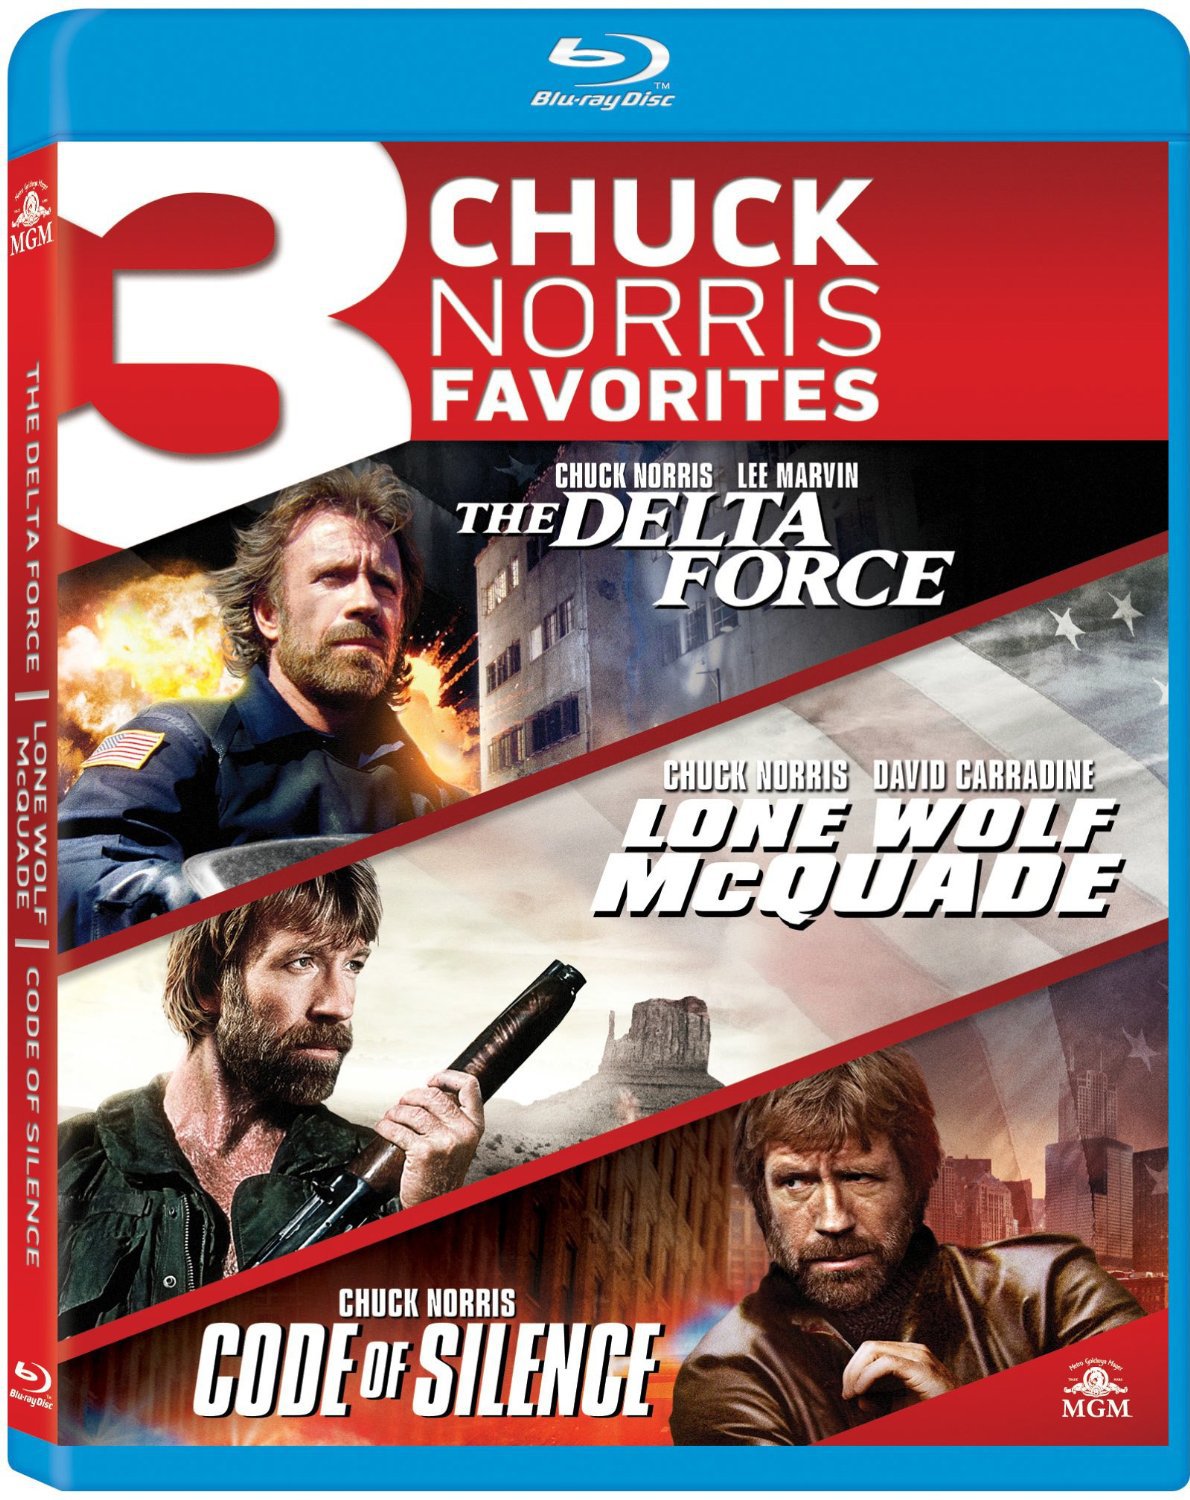 Chuck Norris Favorites